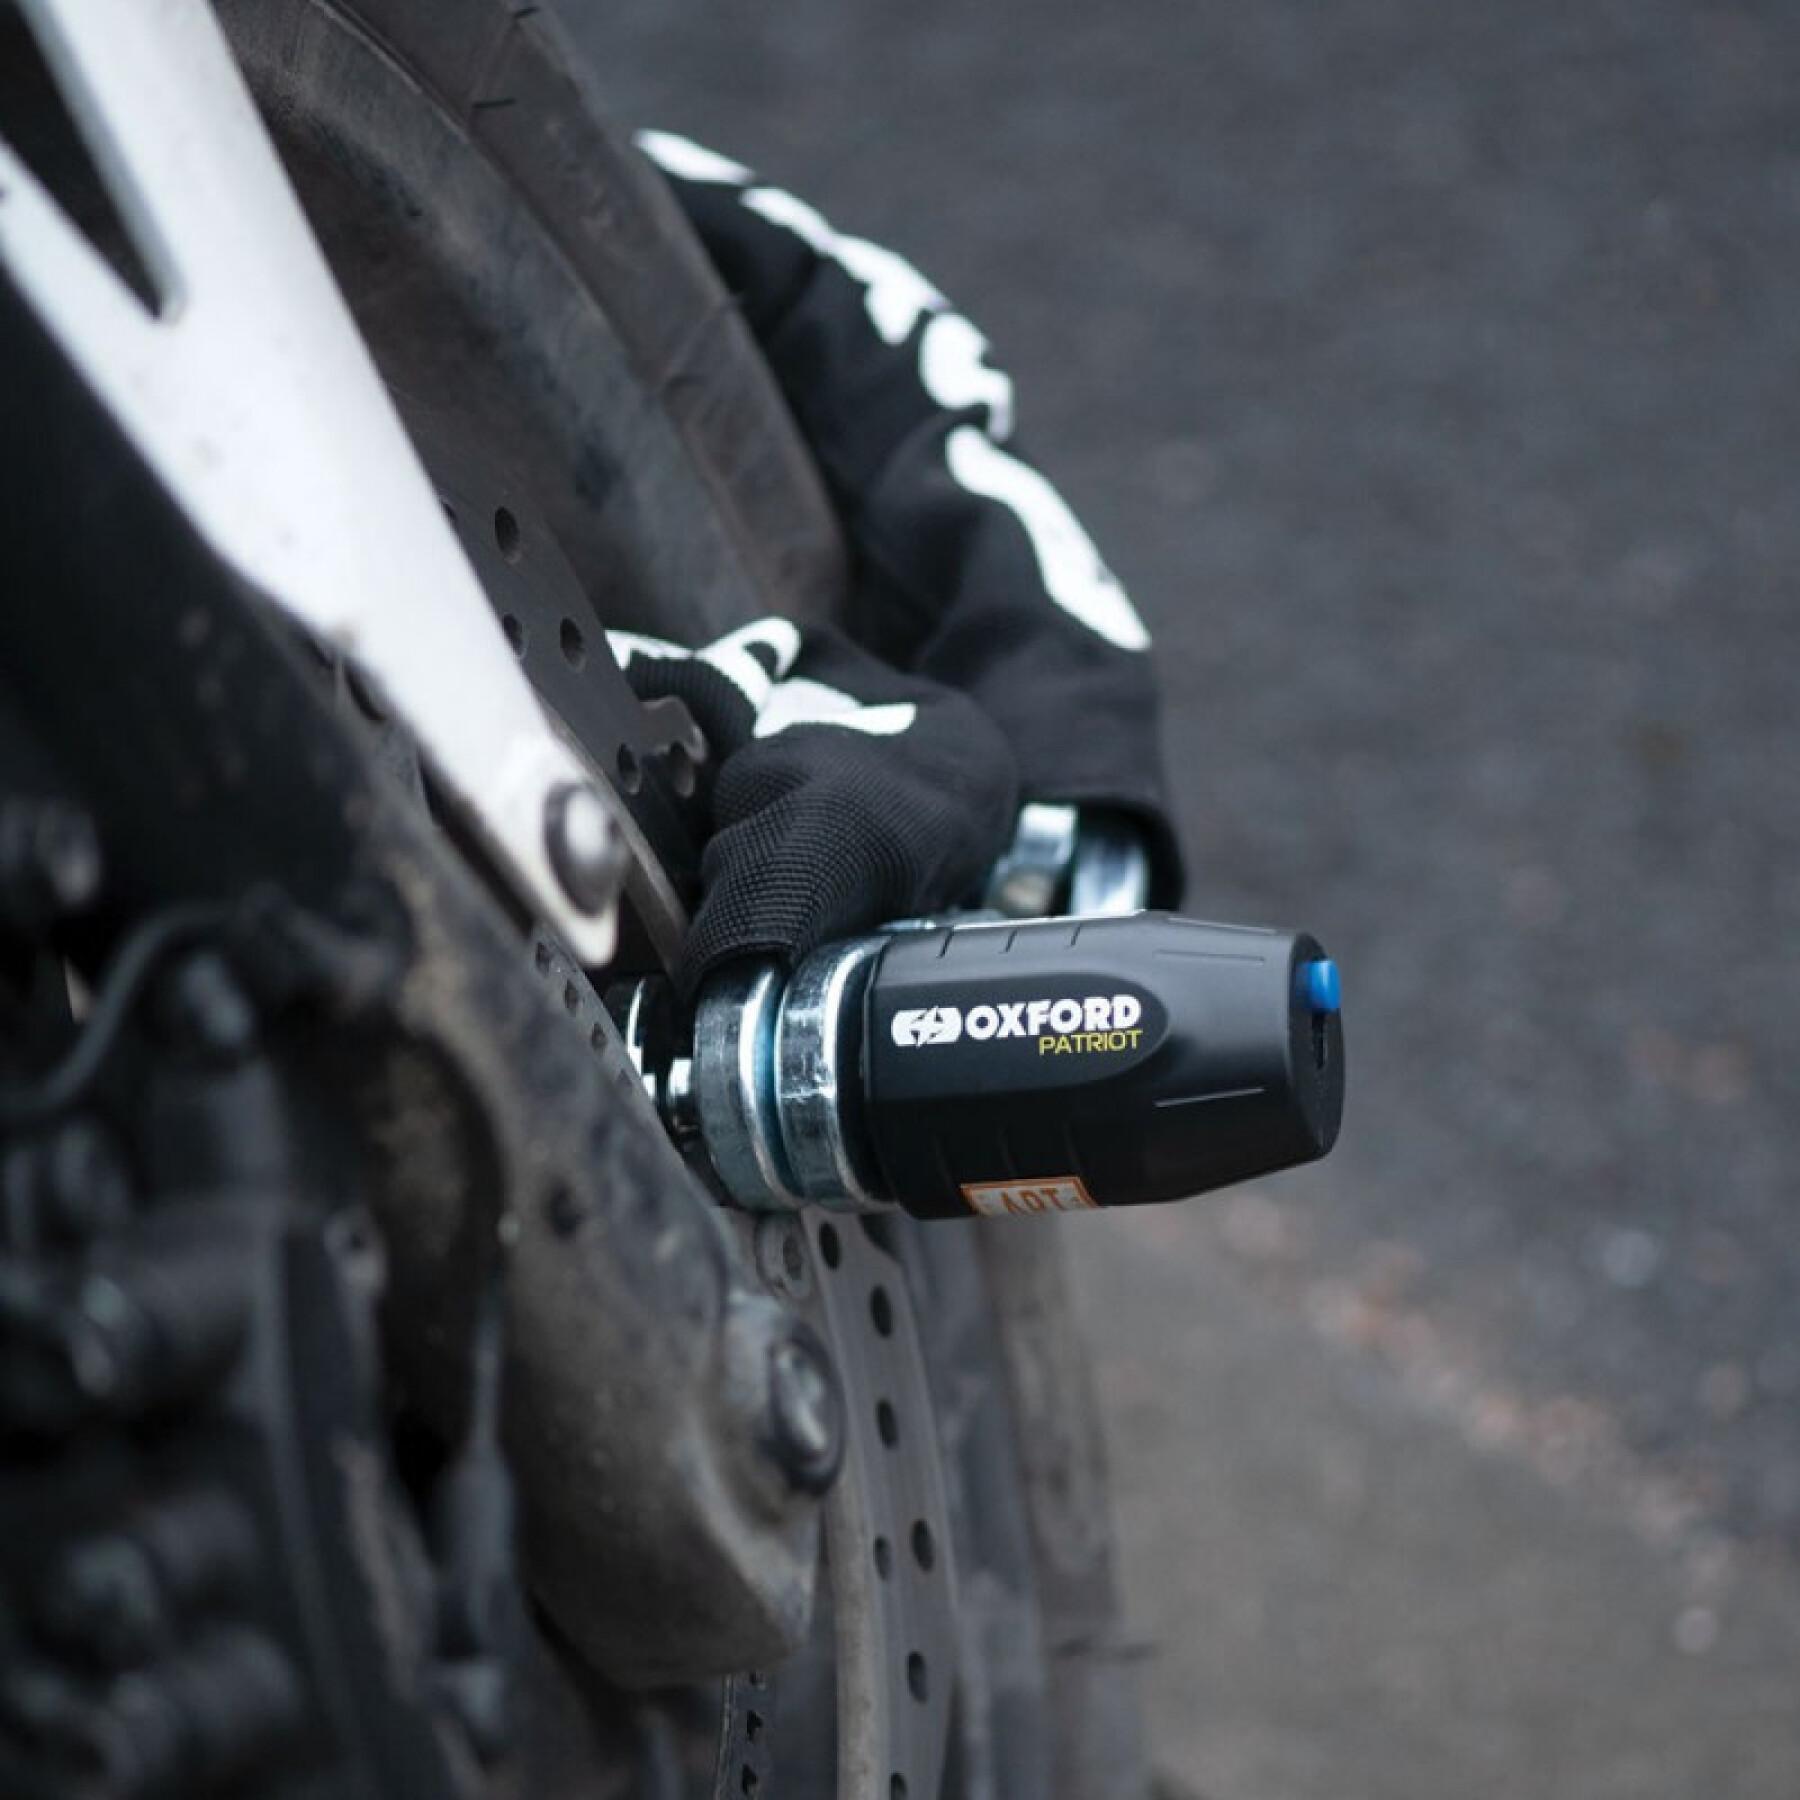 Motorcycle cable lock Oxford Patriot